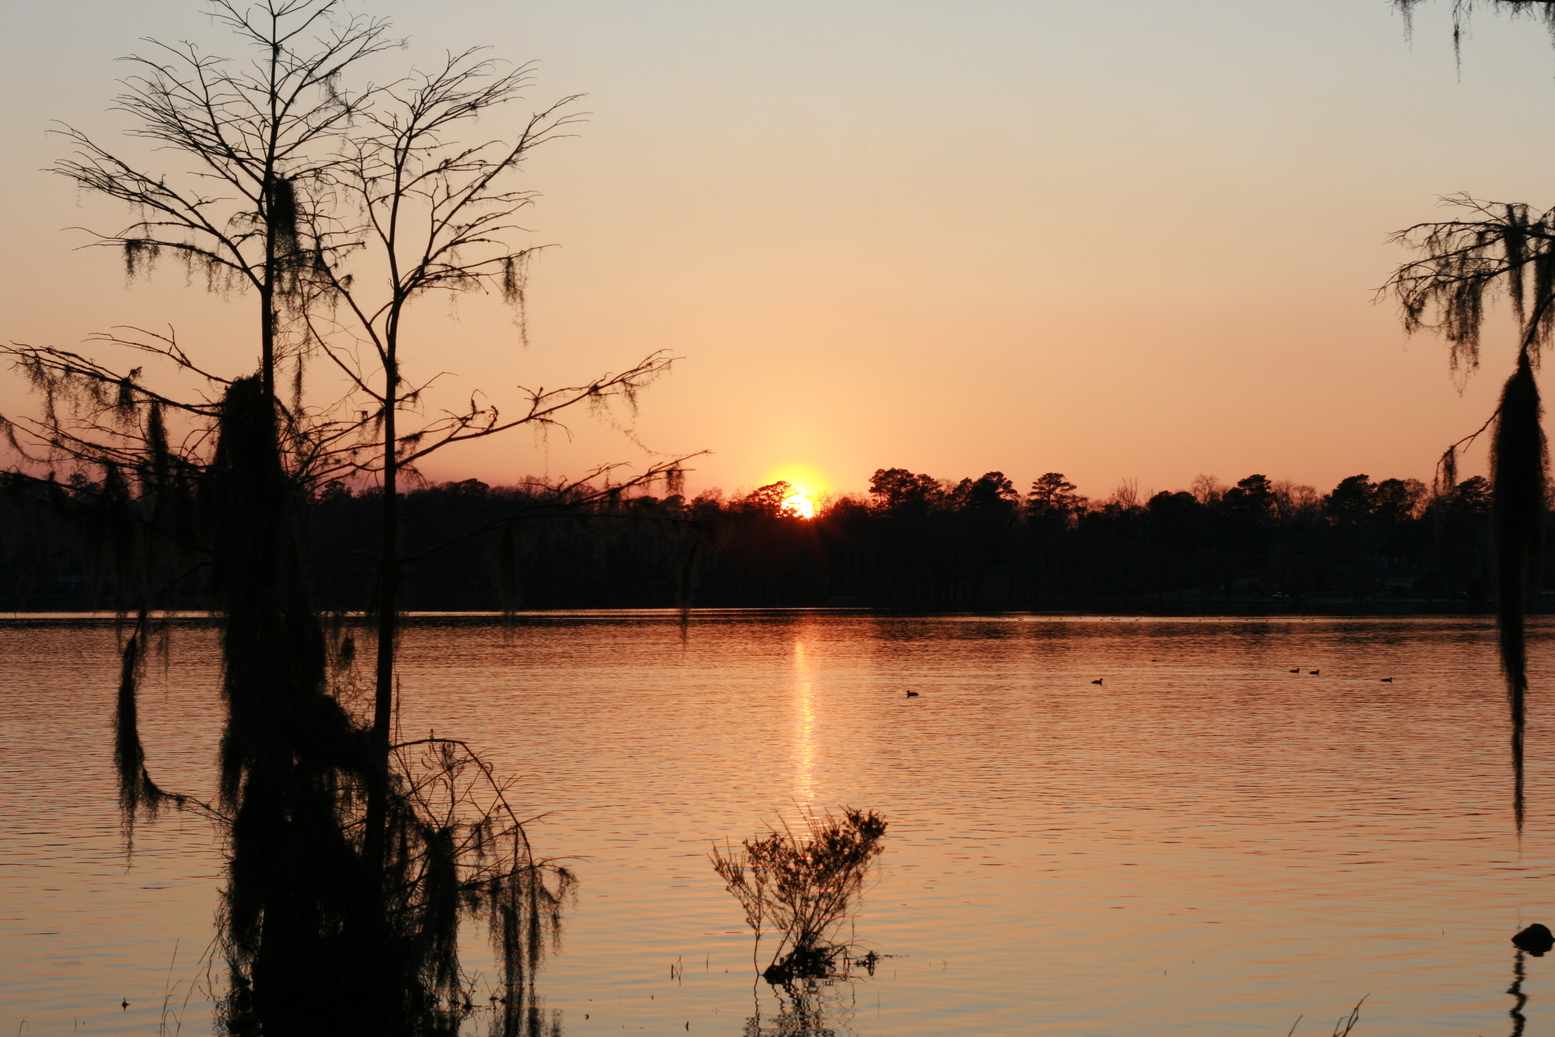 Florala, AL: Sunset at beautiful Lake Jackson